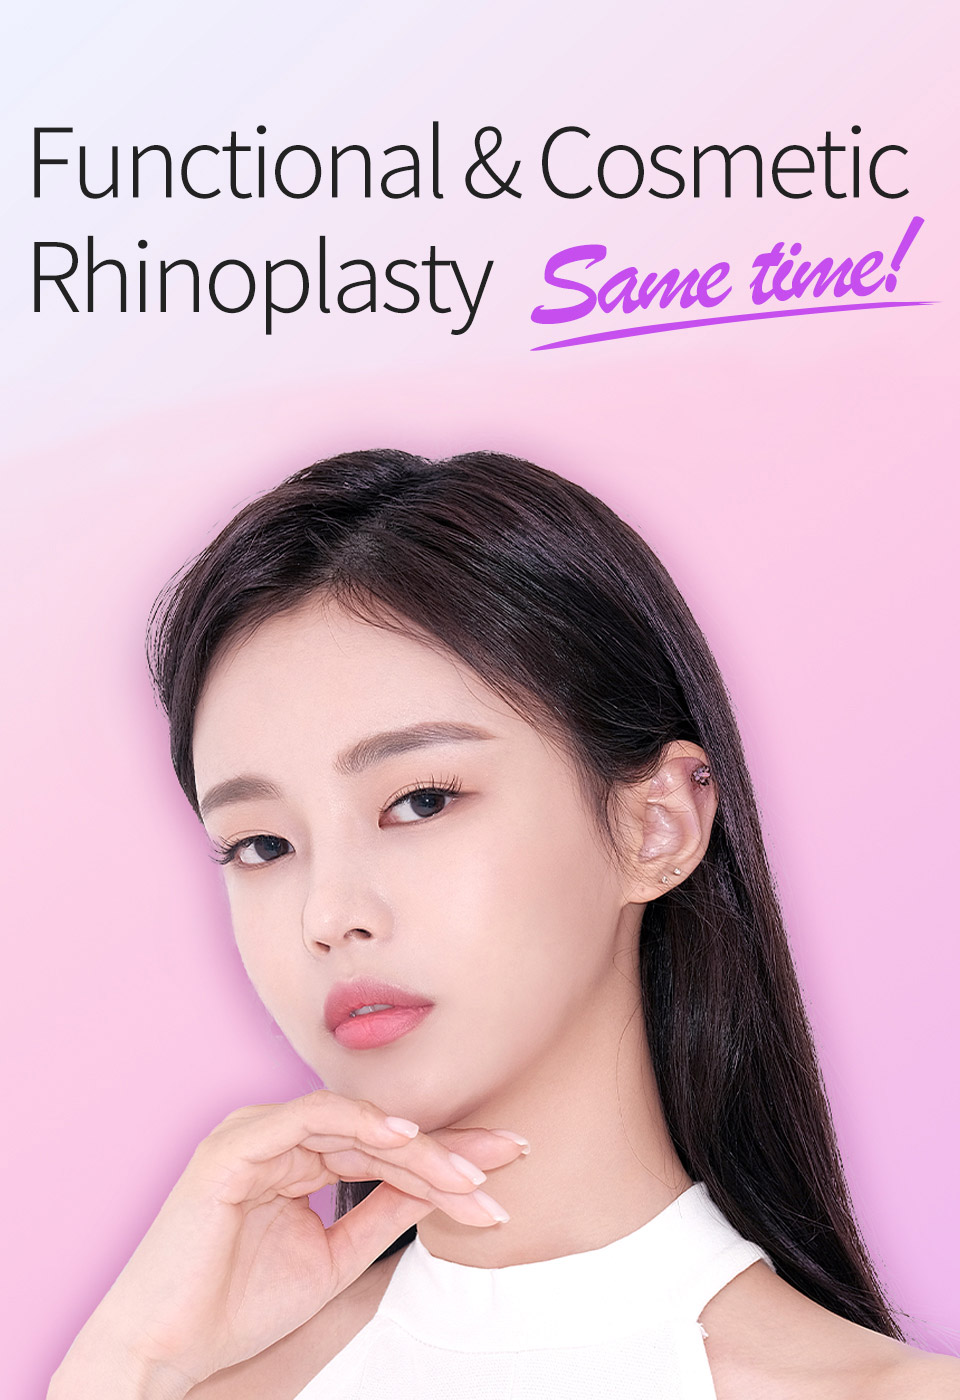 Functional & cosmetic rhinoplasty same time!